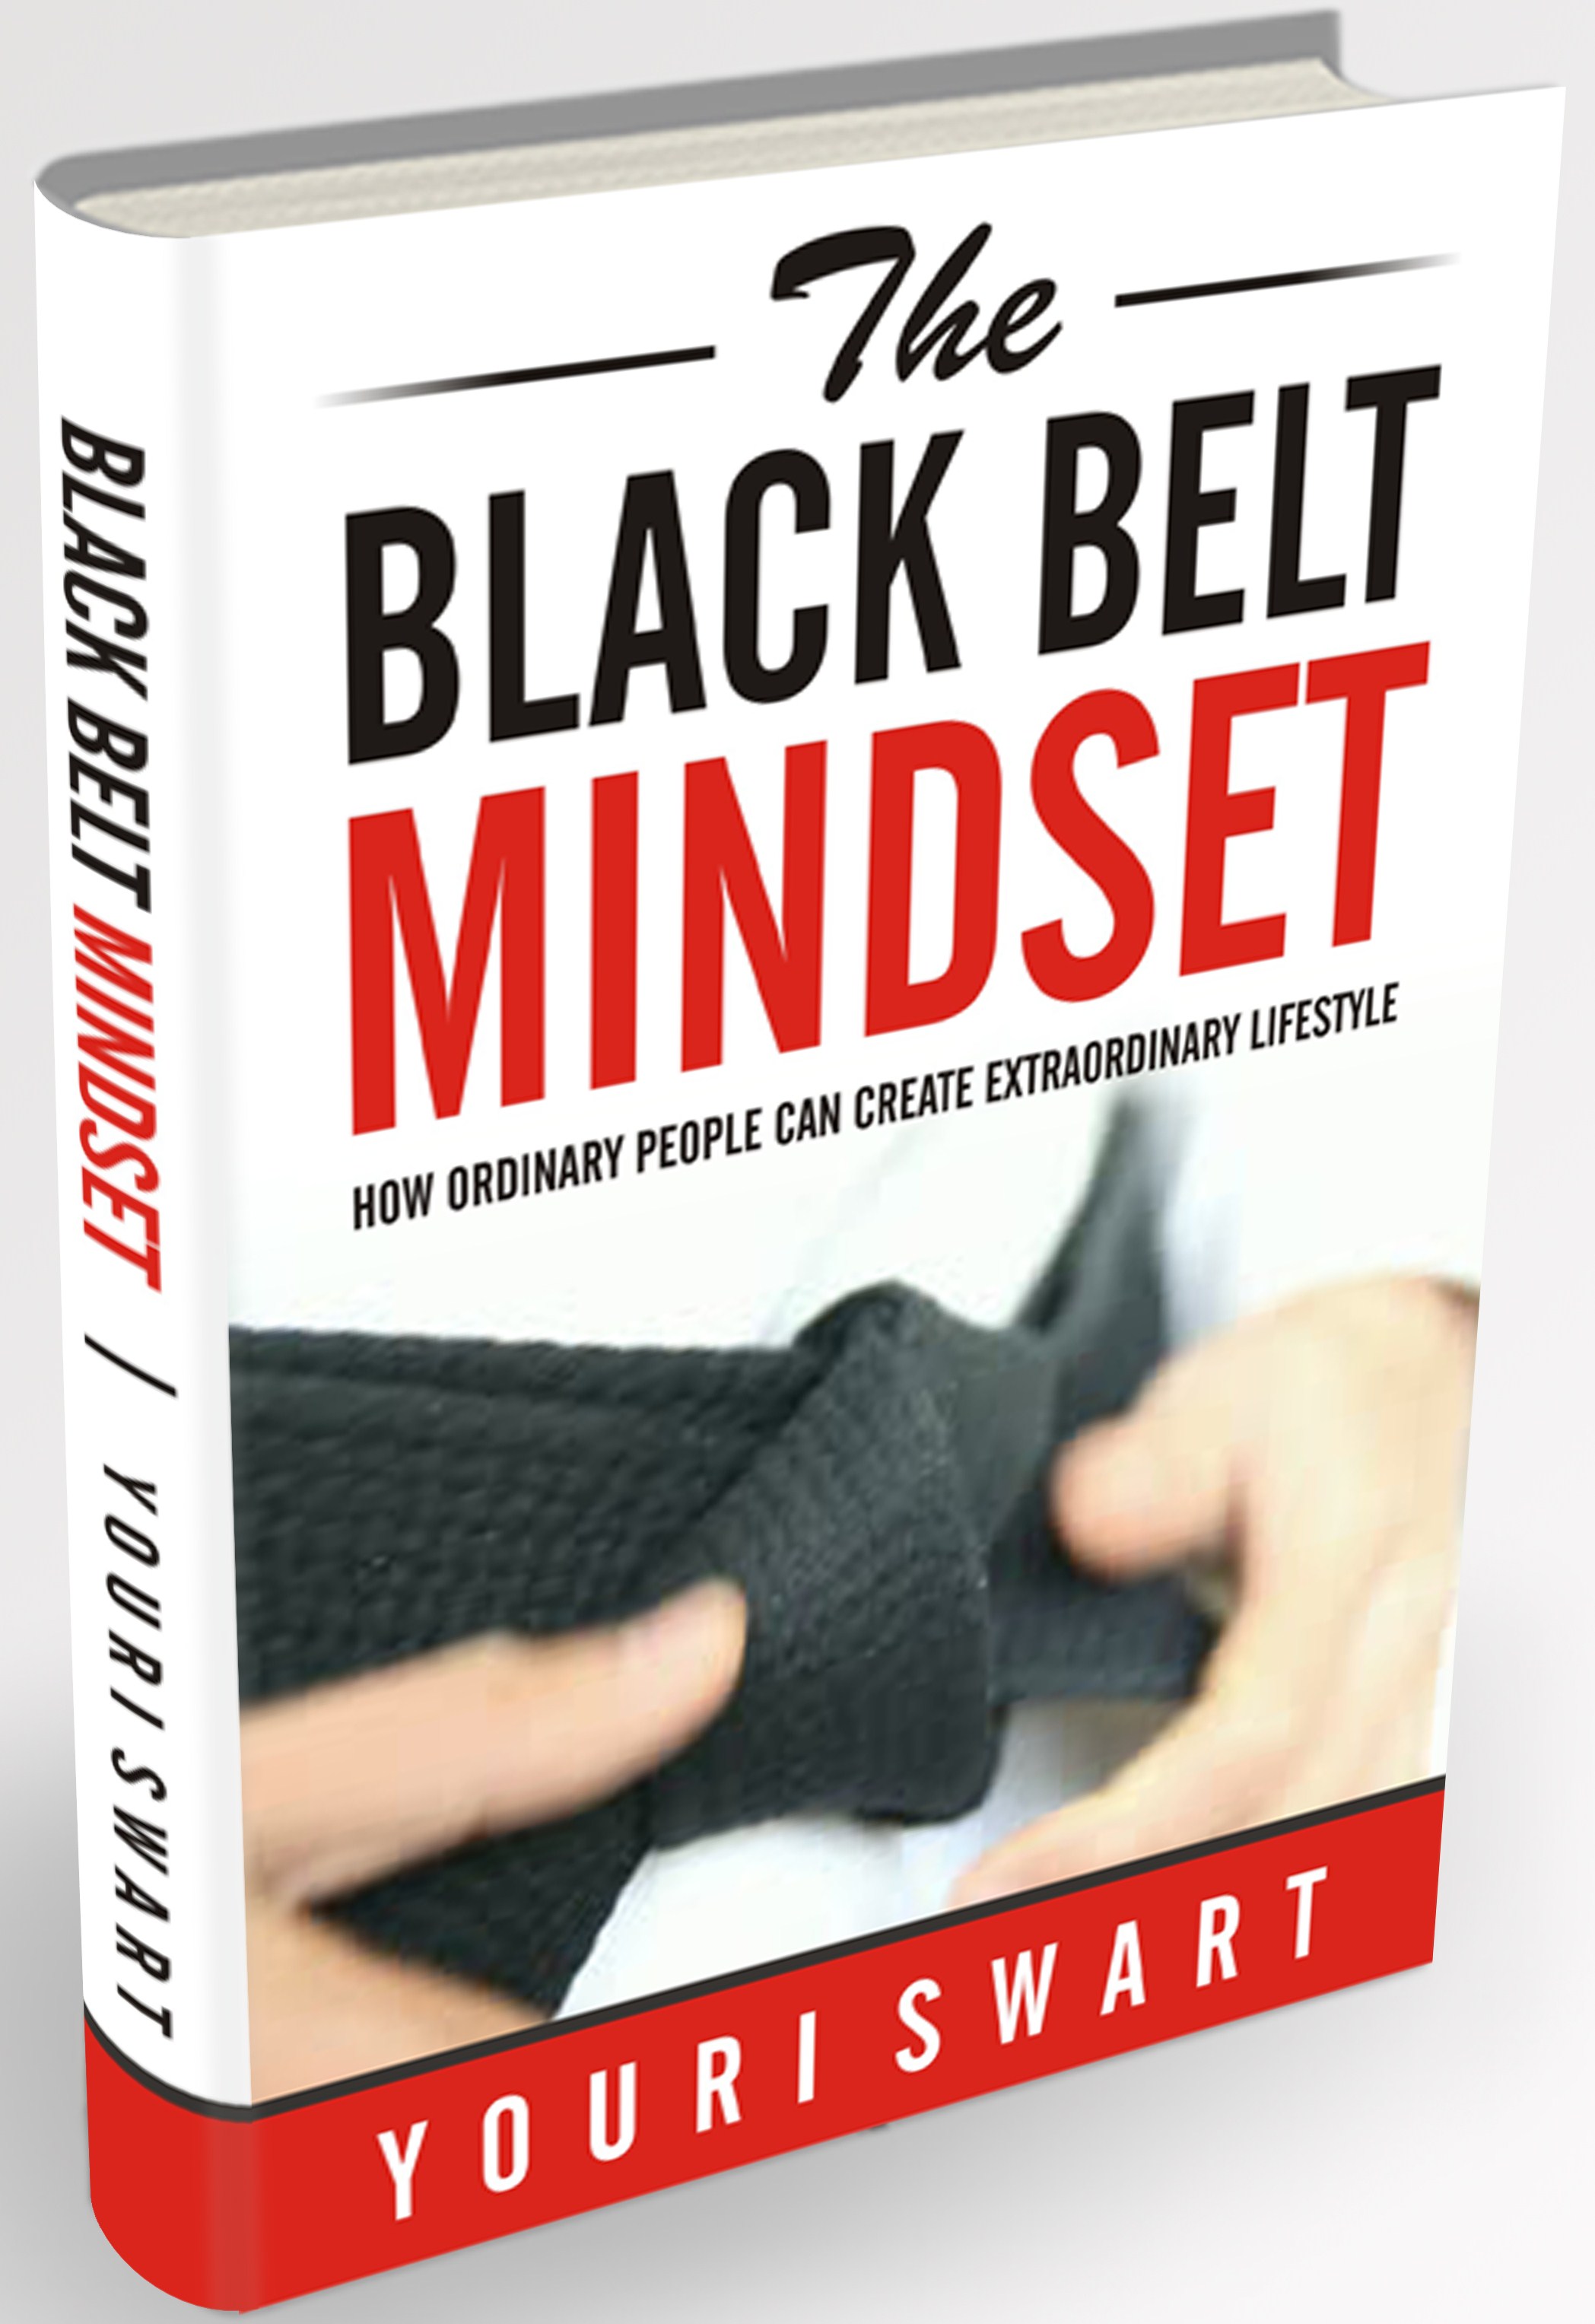 Youri Swart - Blackbelt Mindset